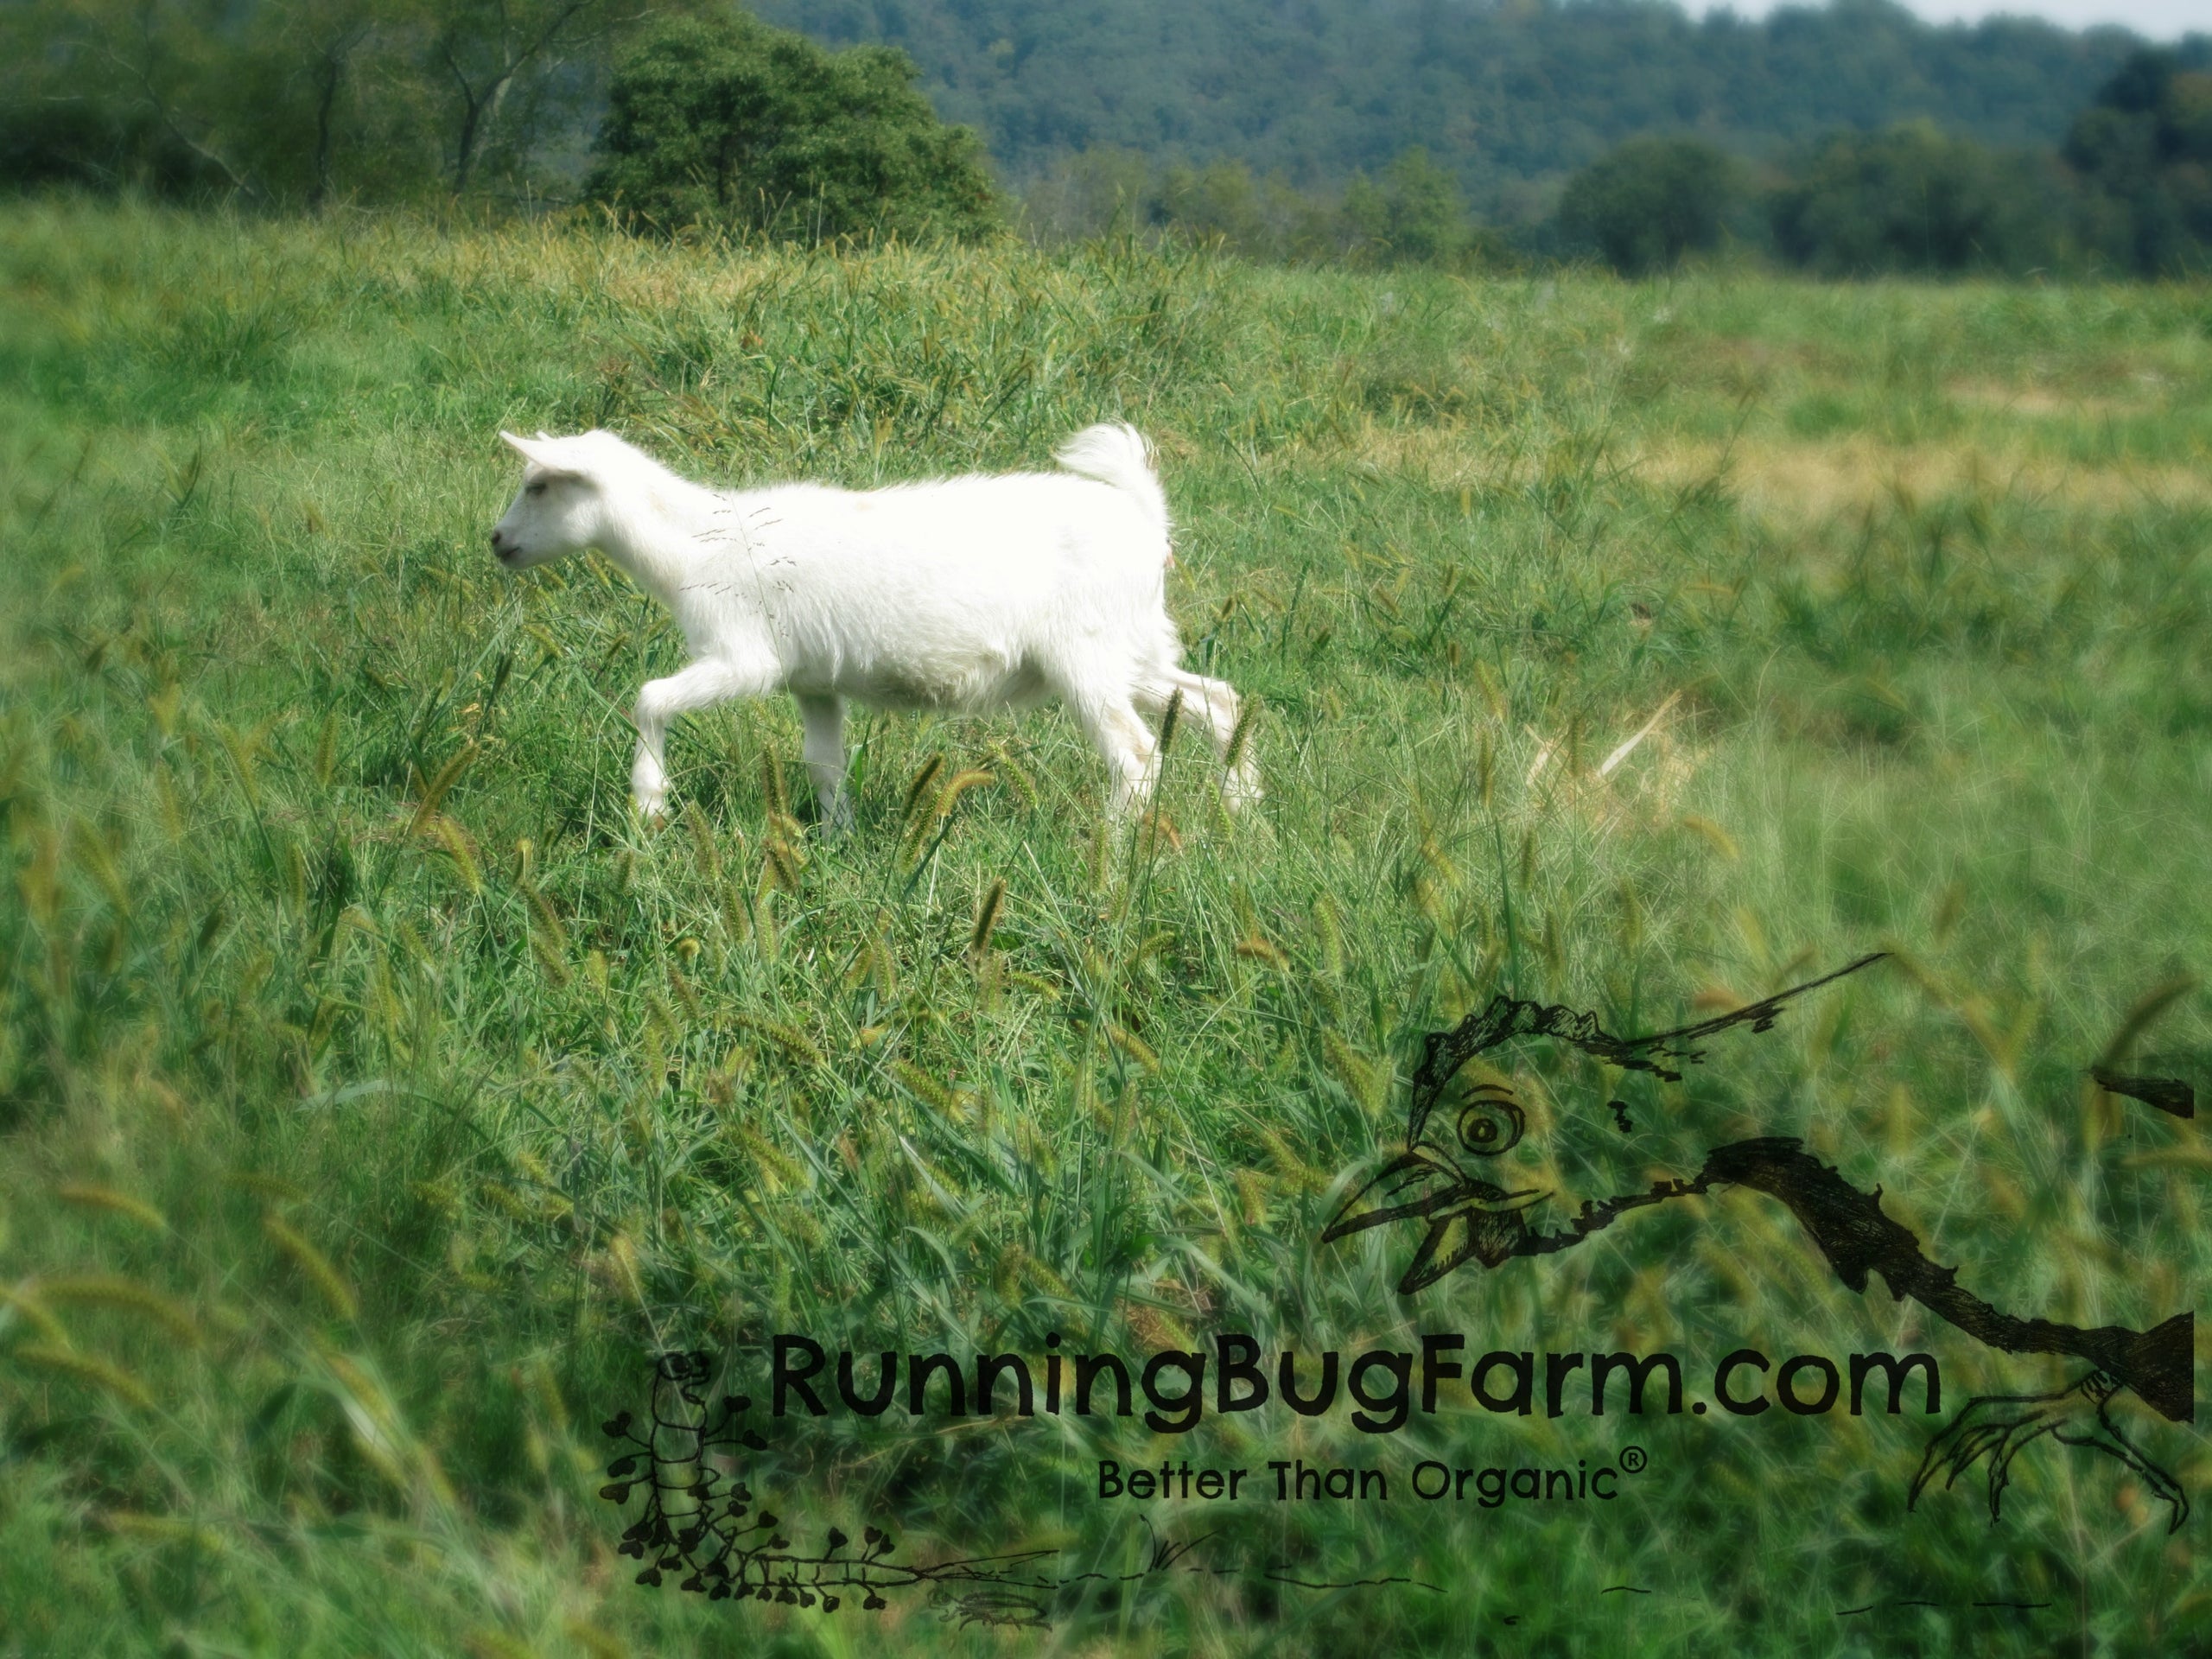 Goat's Milk Soap - Working Hands – Fraga Farm